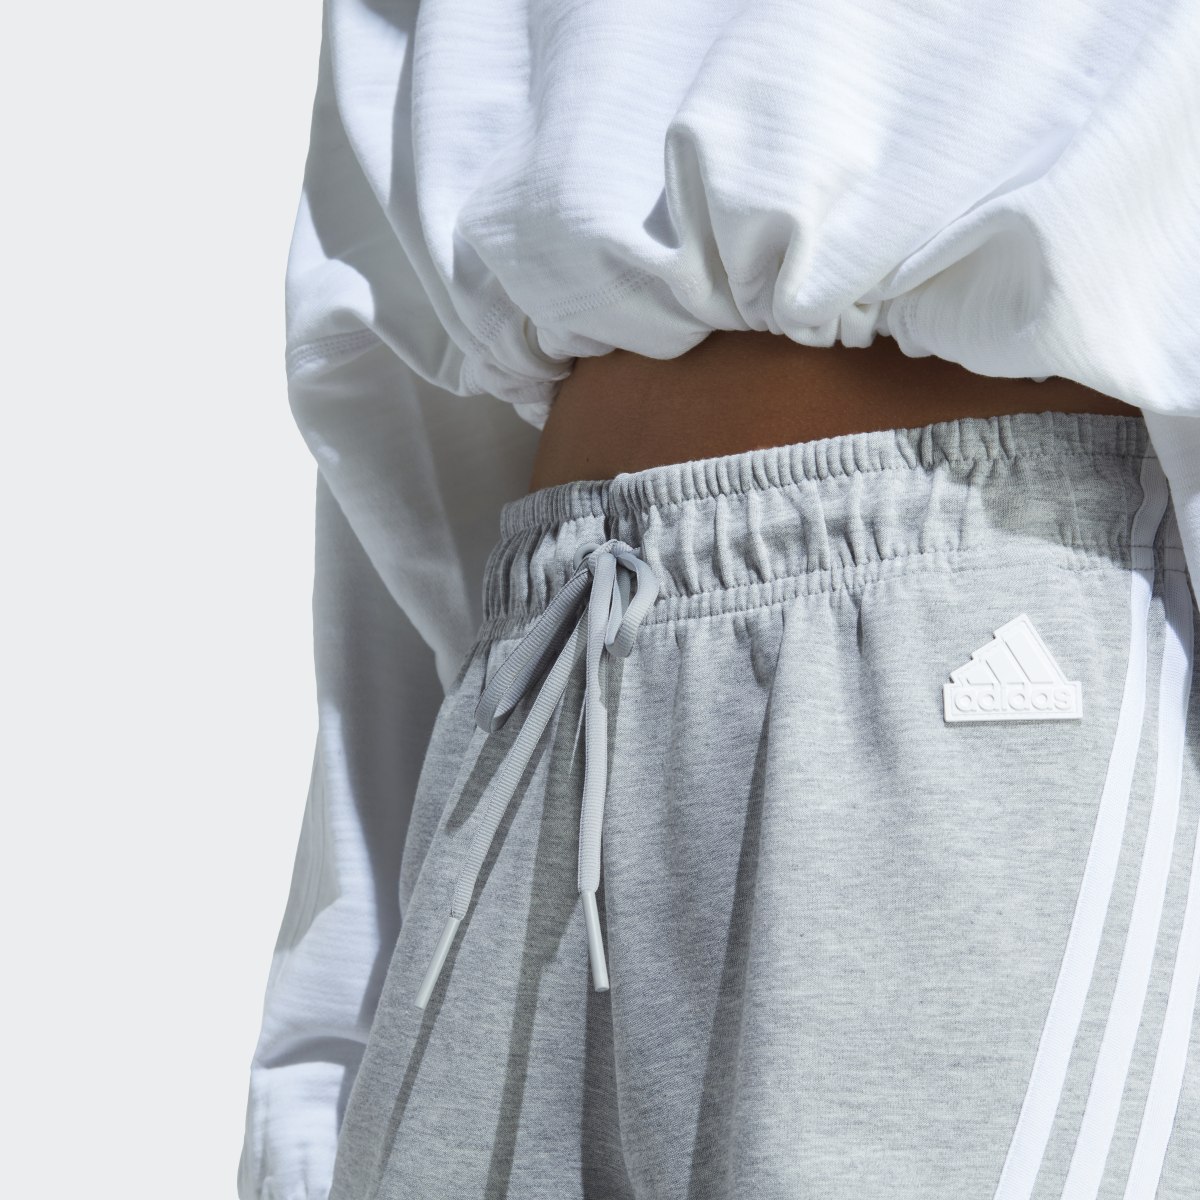 Adidas Future Icons 3-Stripes Shorts. 5